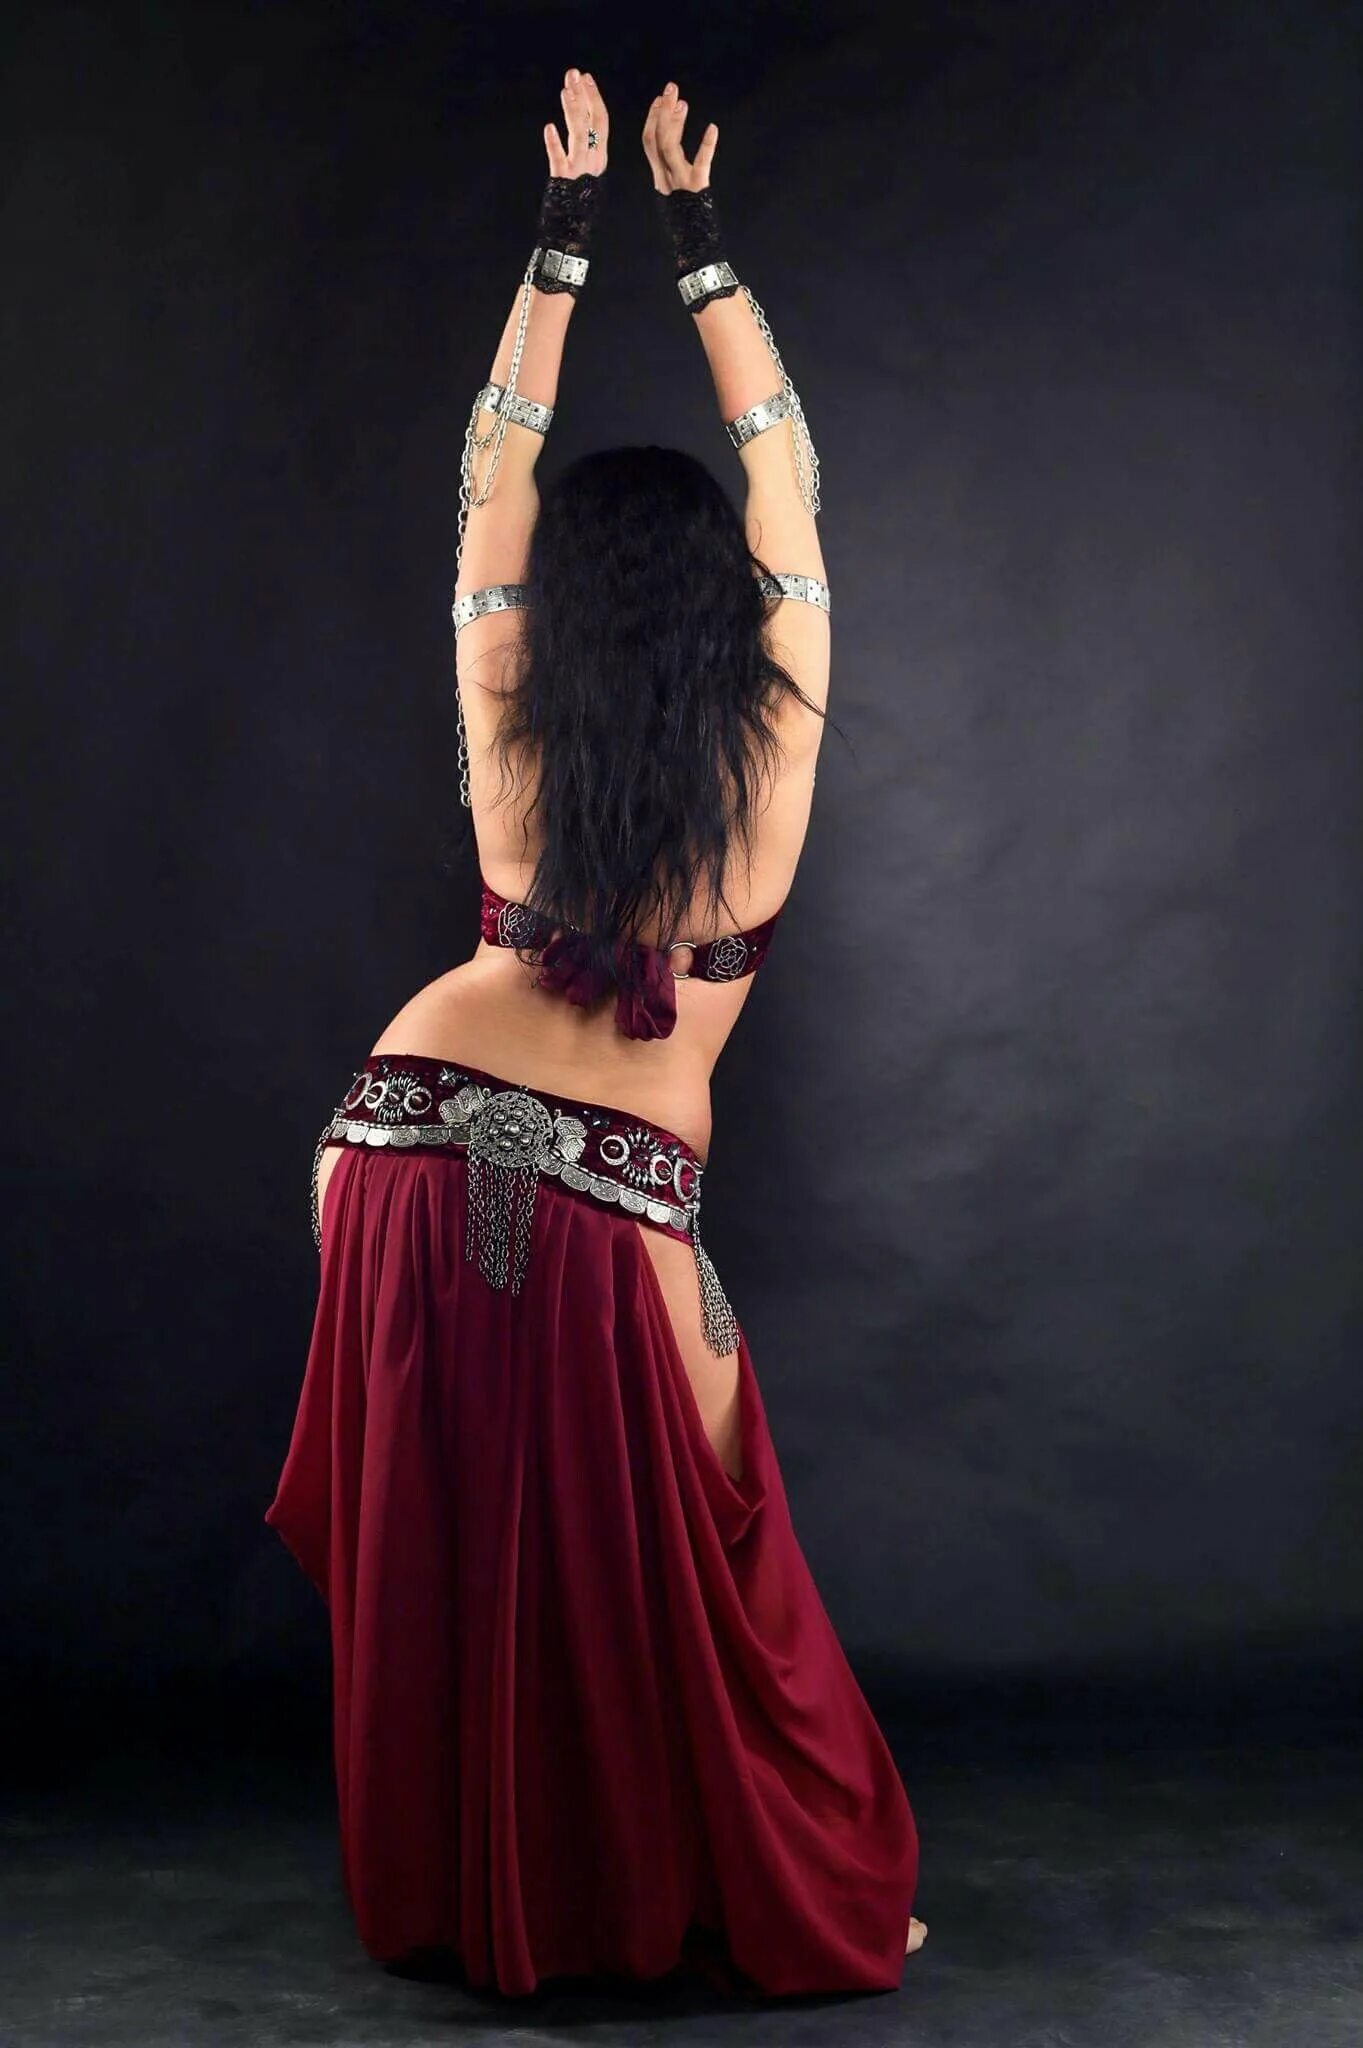 Арабский танец живота видео. Танцовщица Белли дэнс Бастет. Трайбл беллиданс. Бэлли денсер.